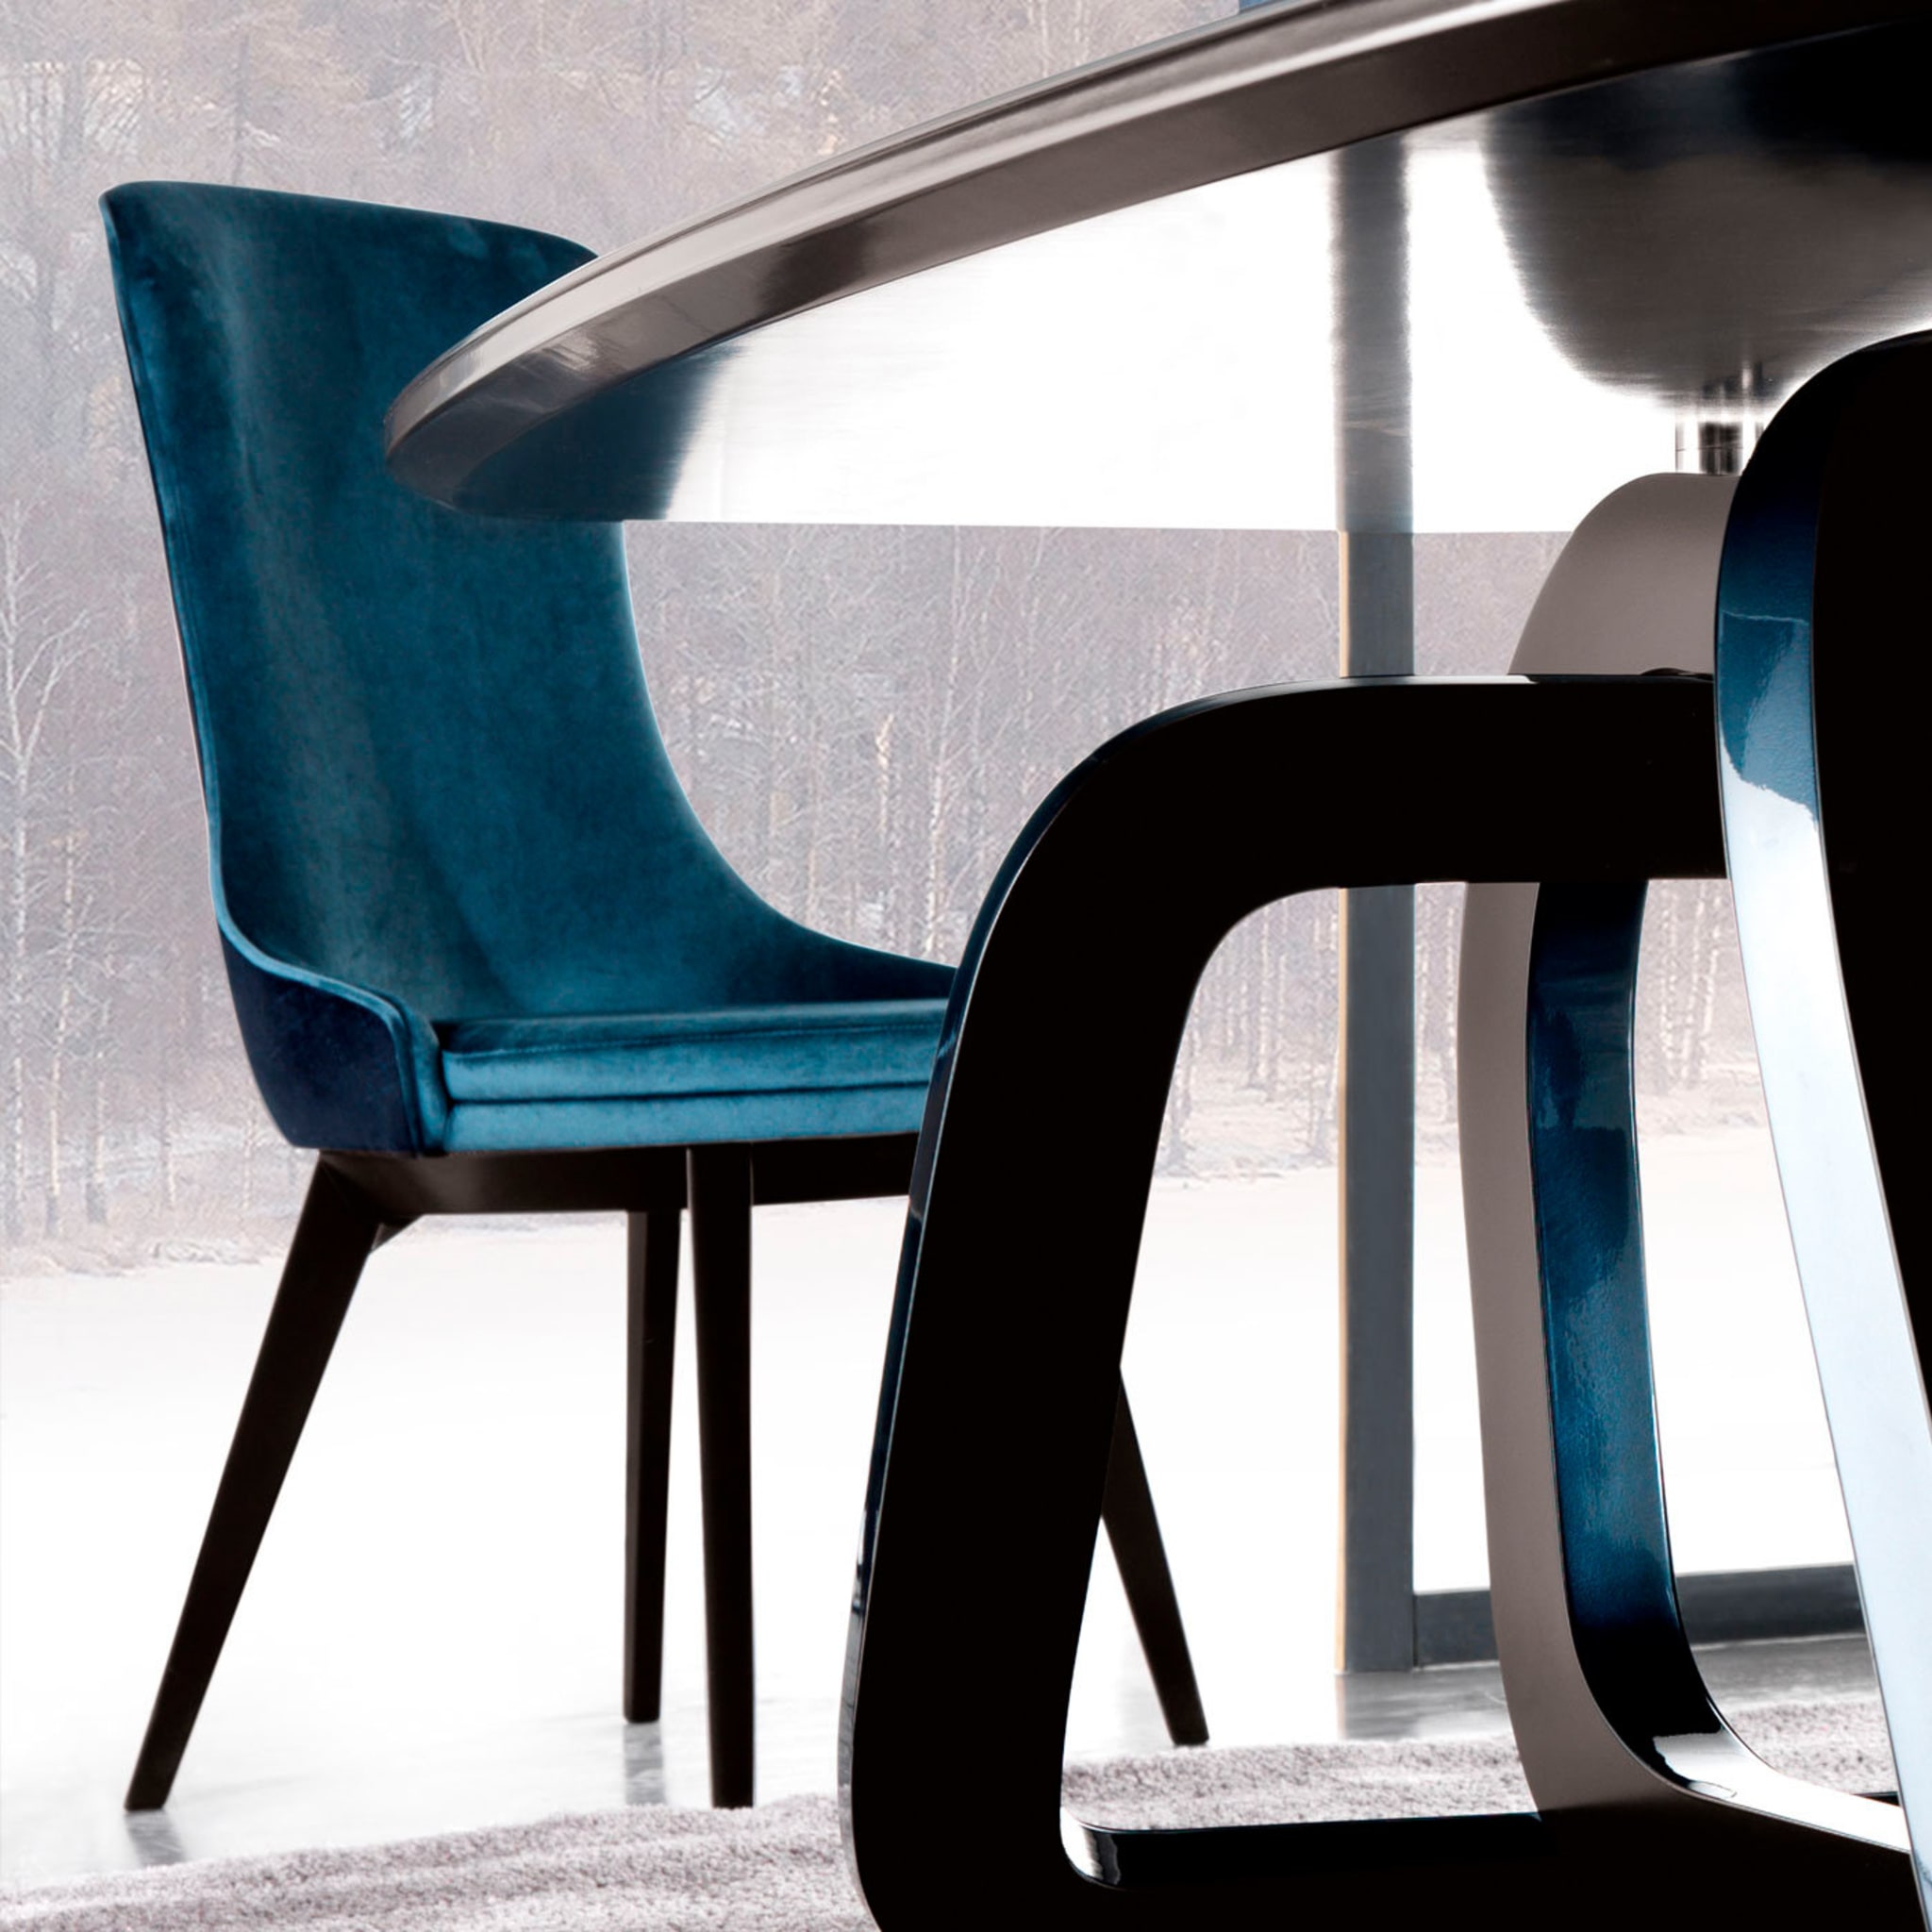 Robin Blue Chair by Archirivolto - Alternative view 3